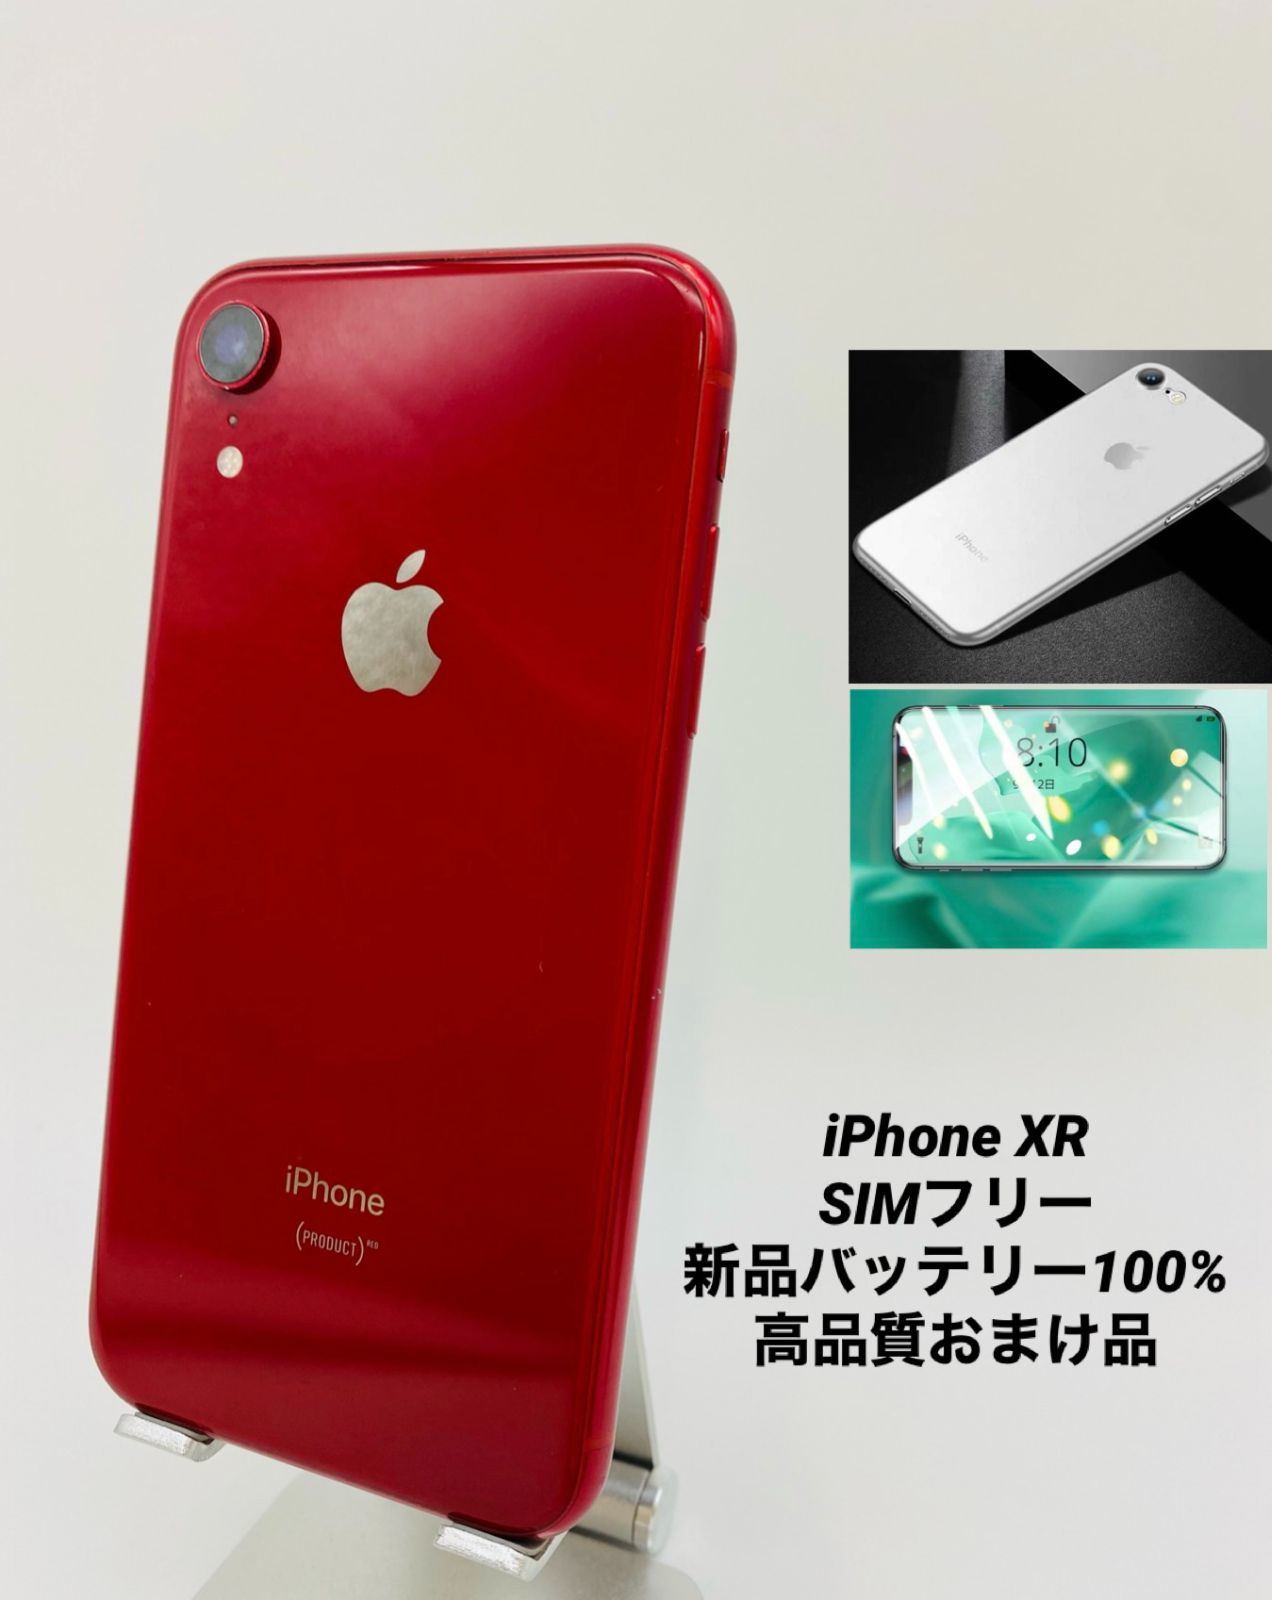 iPhoneXR 64GB レッド/新品バッテリー100%/シムフリー/おまけ多数 XR-015 - メルカリShops